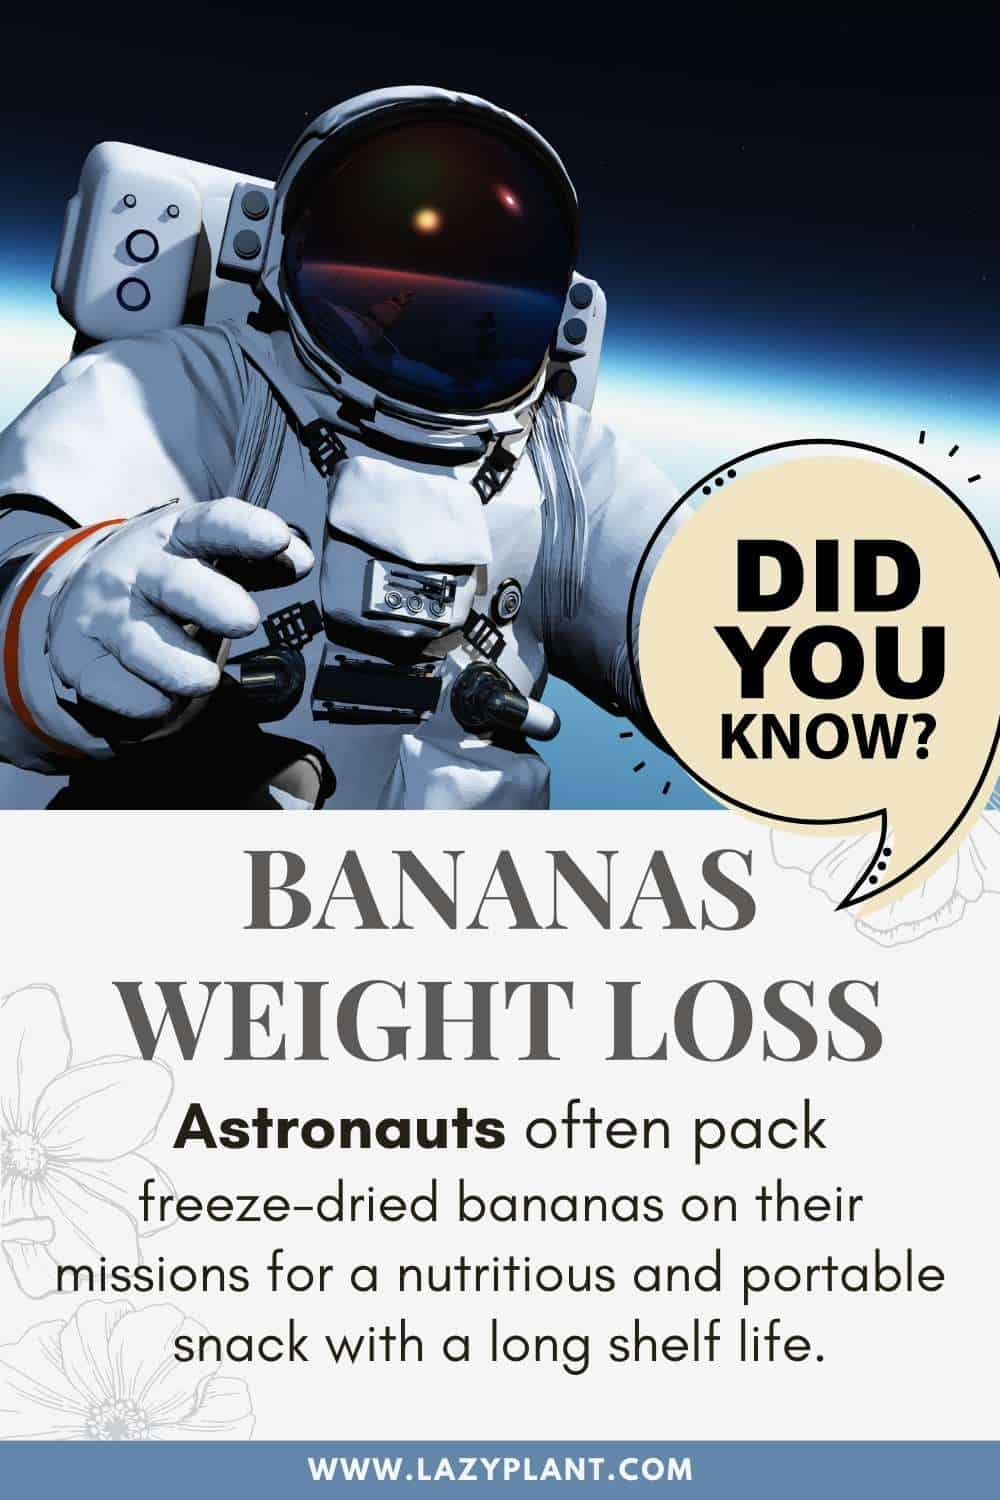 Fun facts of Bananas